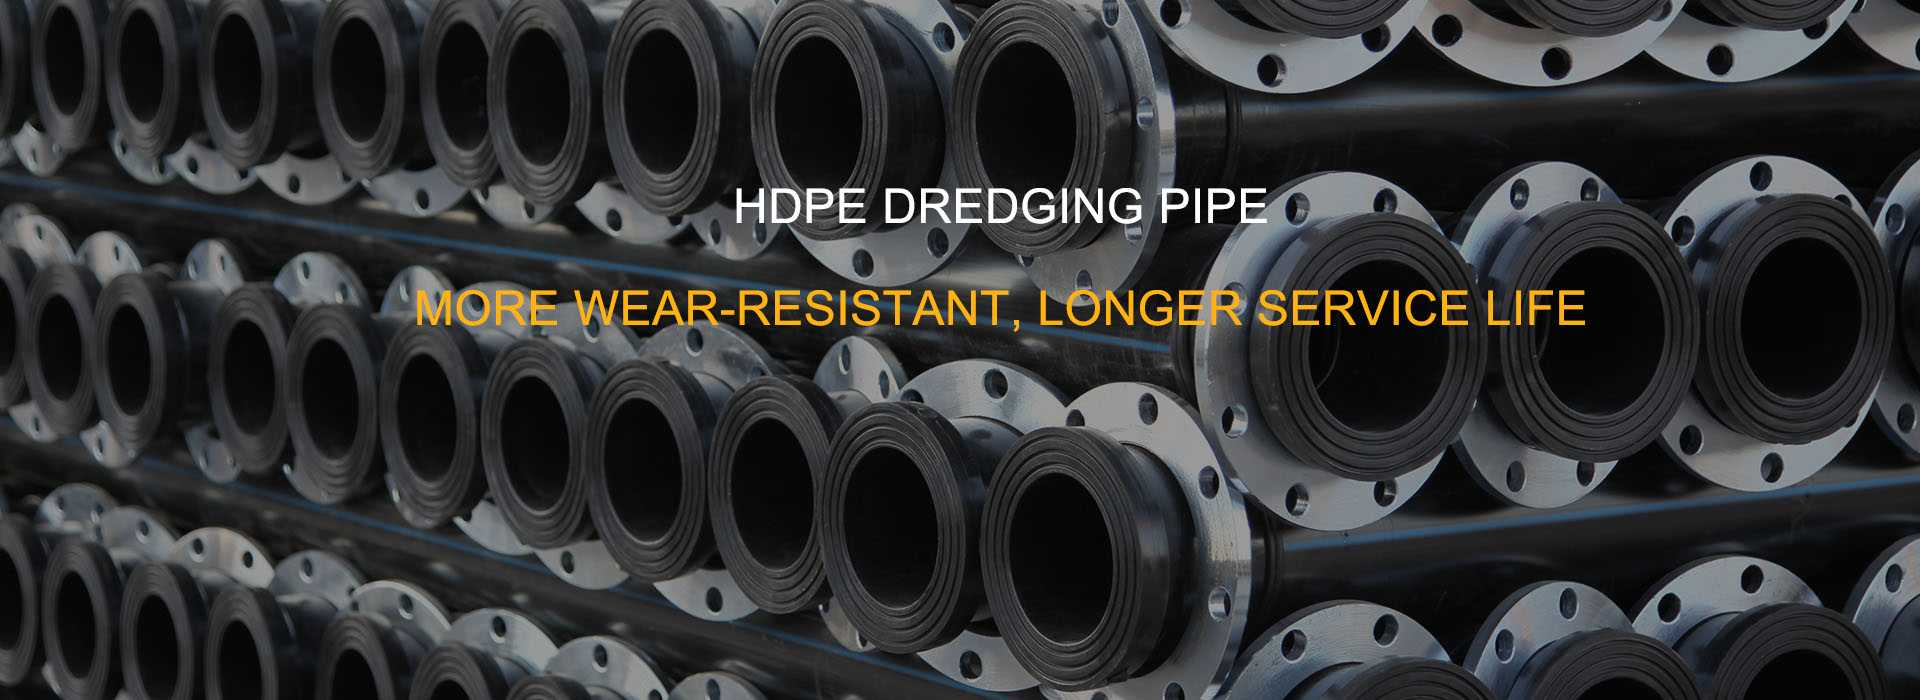 HDPE dredging pipe